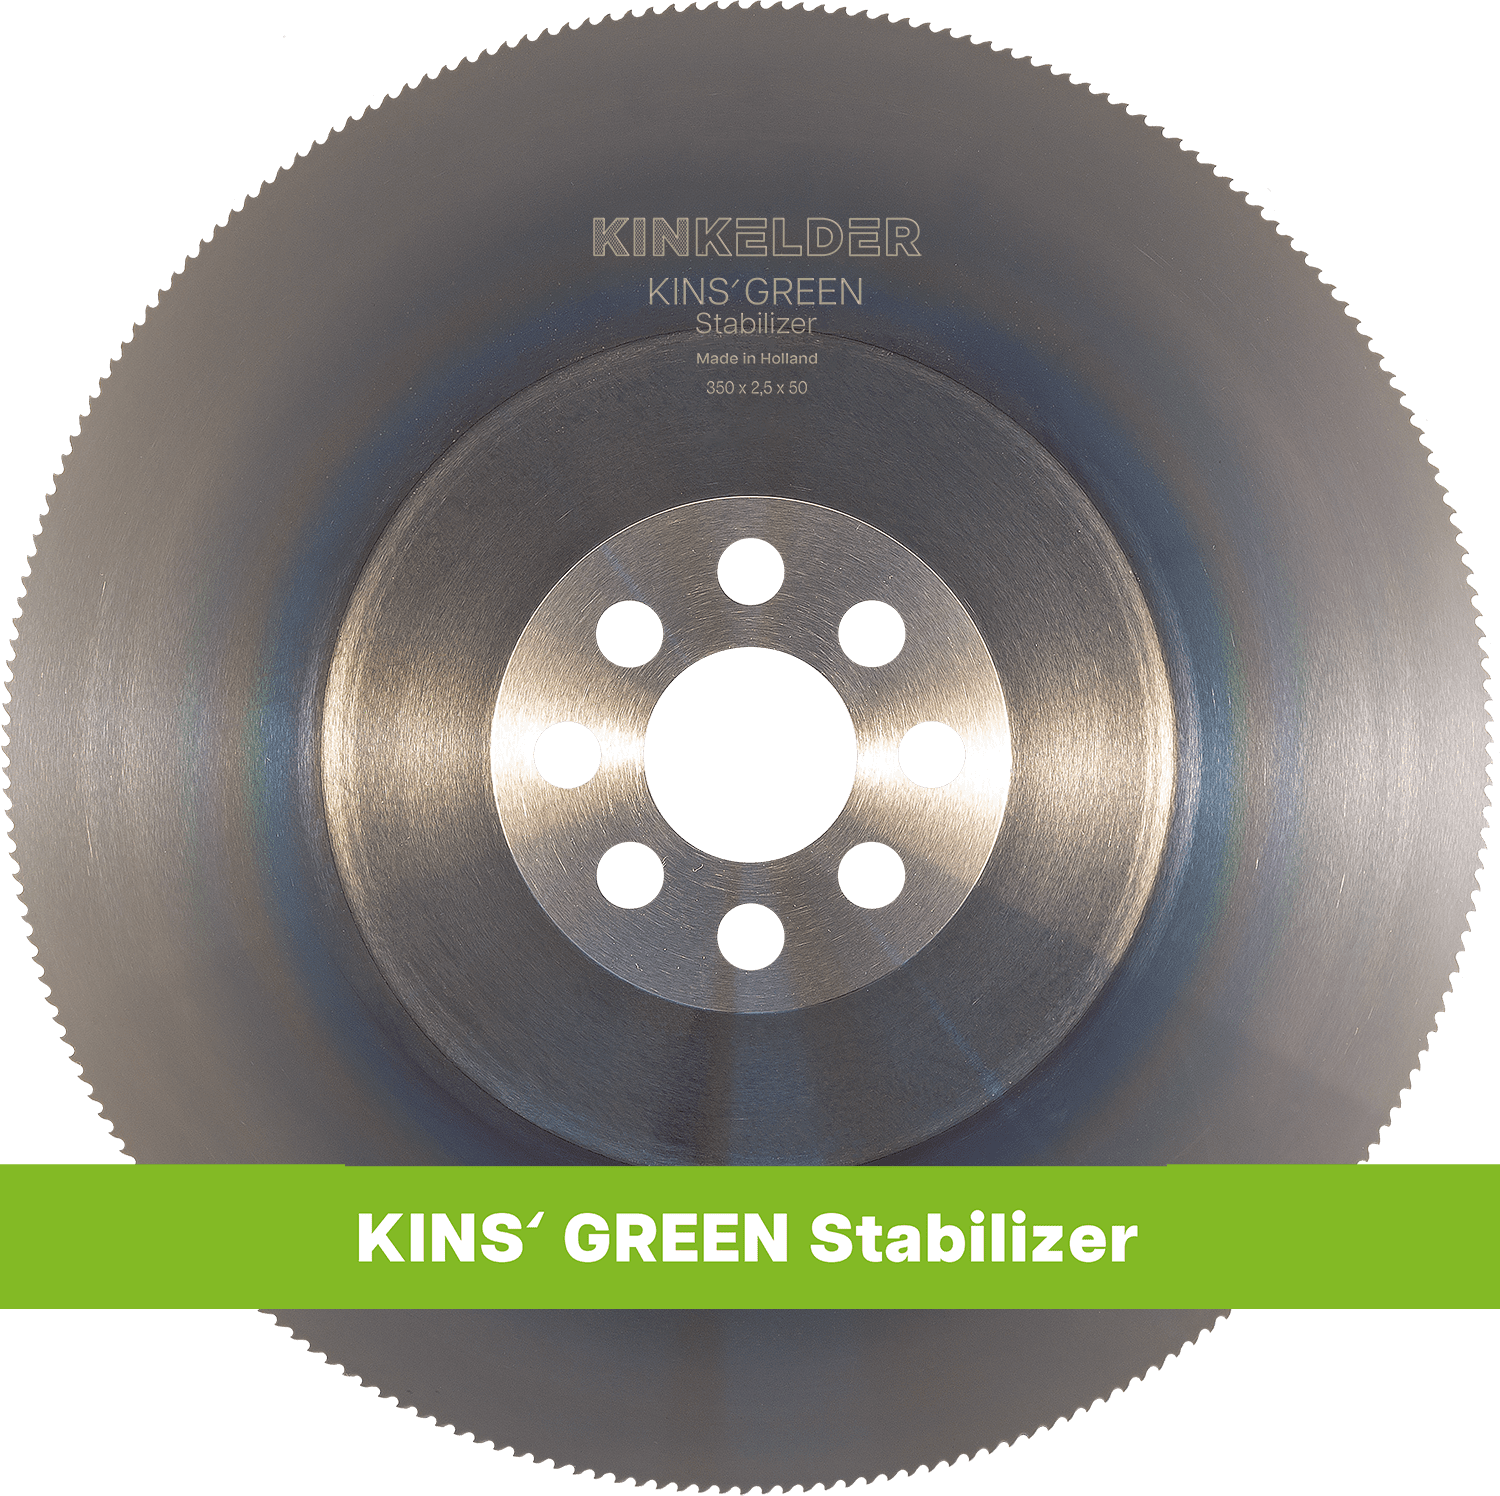 KINS‘ GREEN Stabilizer